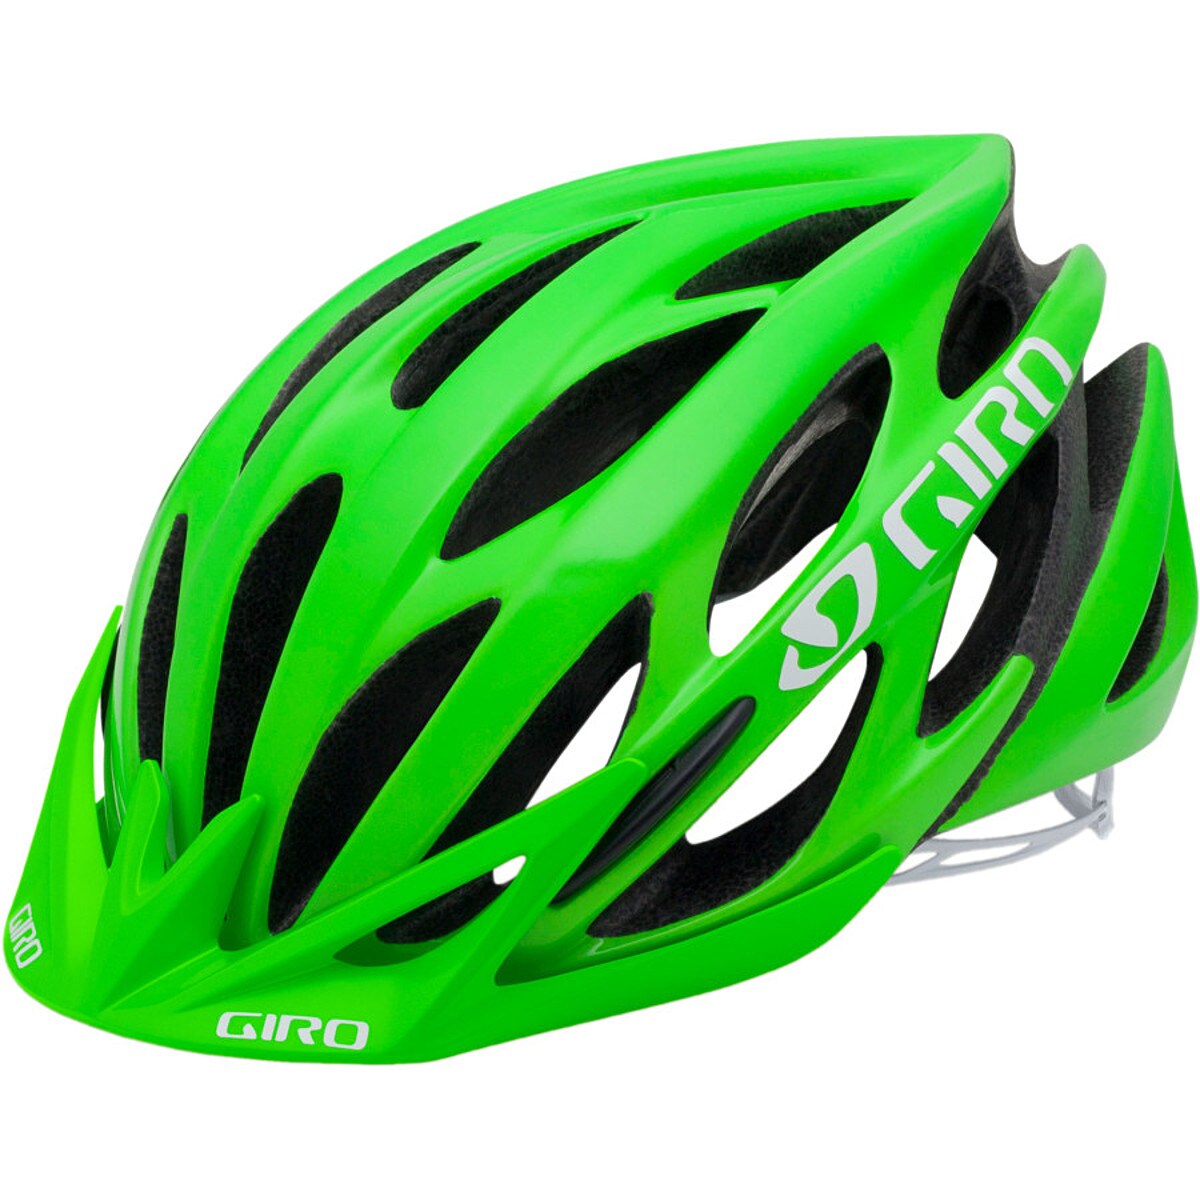 Arabische Sarabo Fervent beklimmen Giro Athlon Helmet - Bike